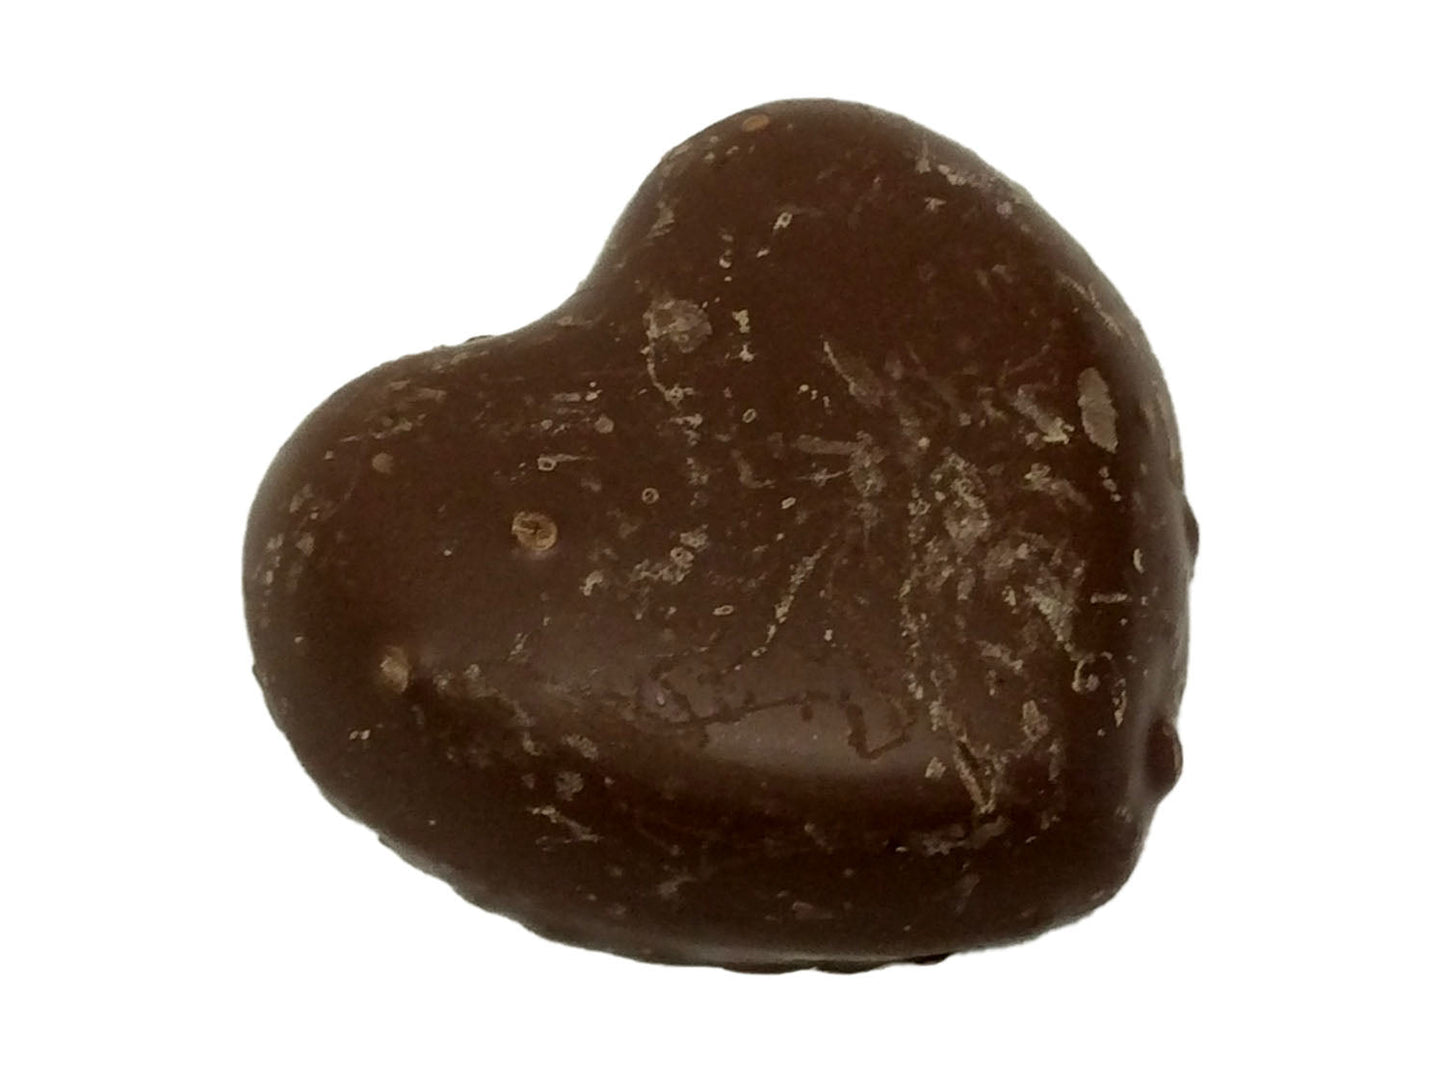 Hershey's Marshmallow Heart - 2.2 oz unwrapped